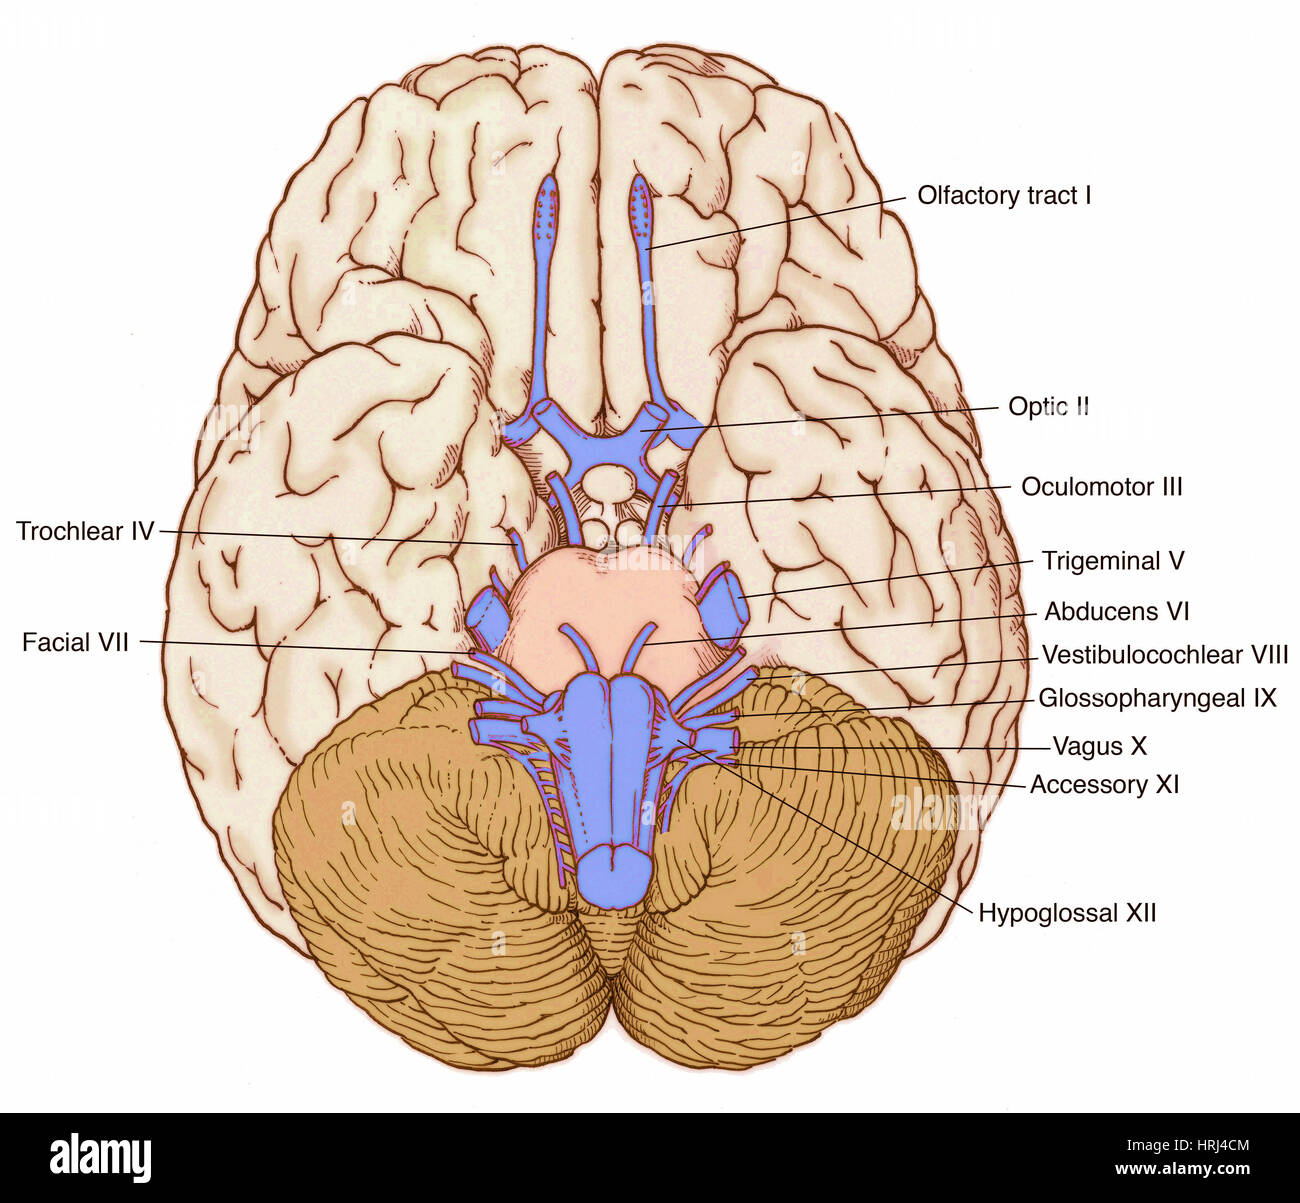 brain model labeled cranial nerves